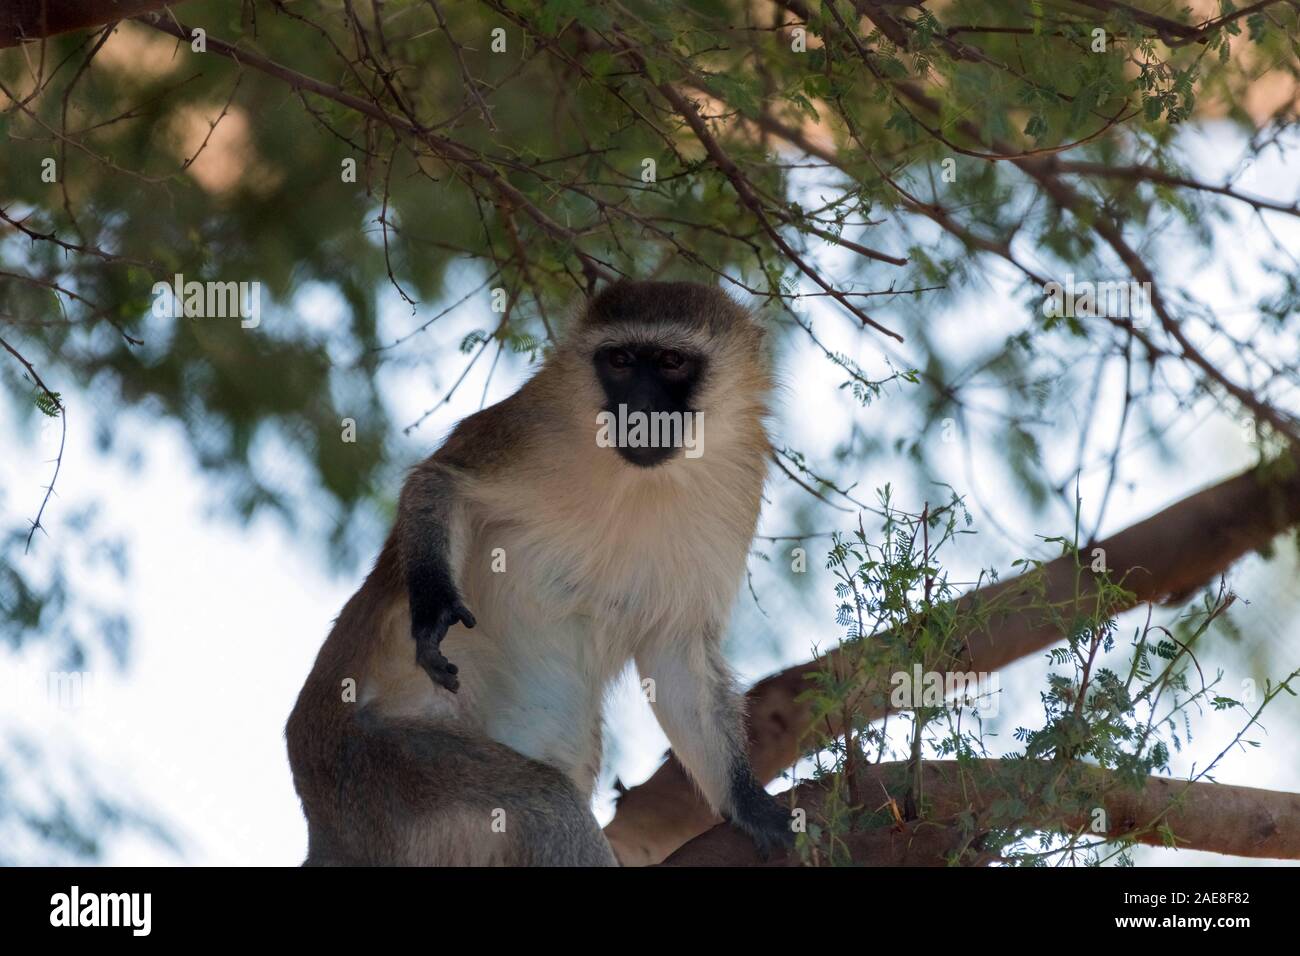 Cute Wild Animal Vervet Monkey in Al Ain Zoo Safari Stock Photo